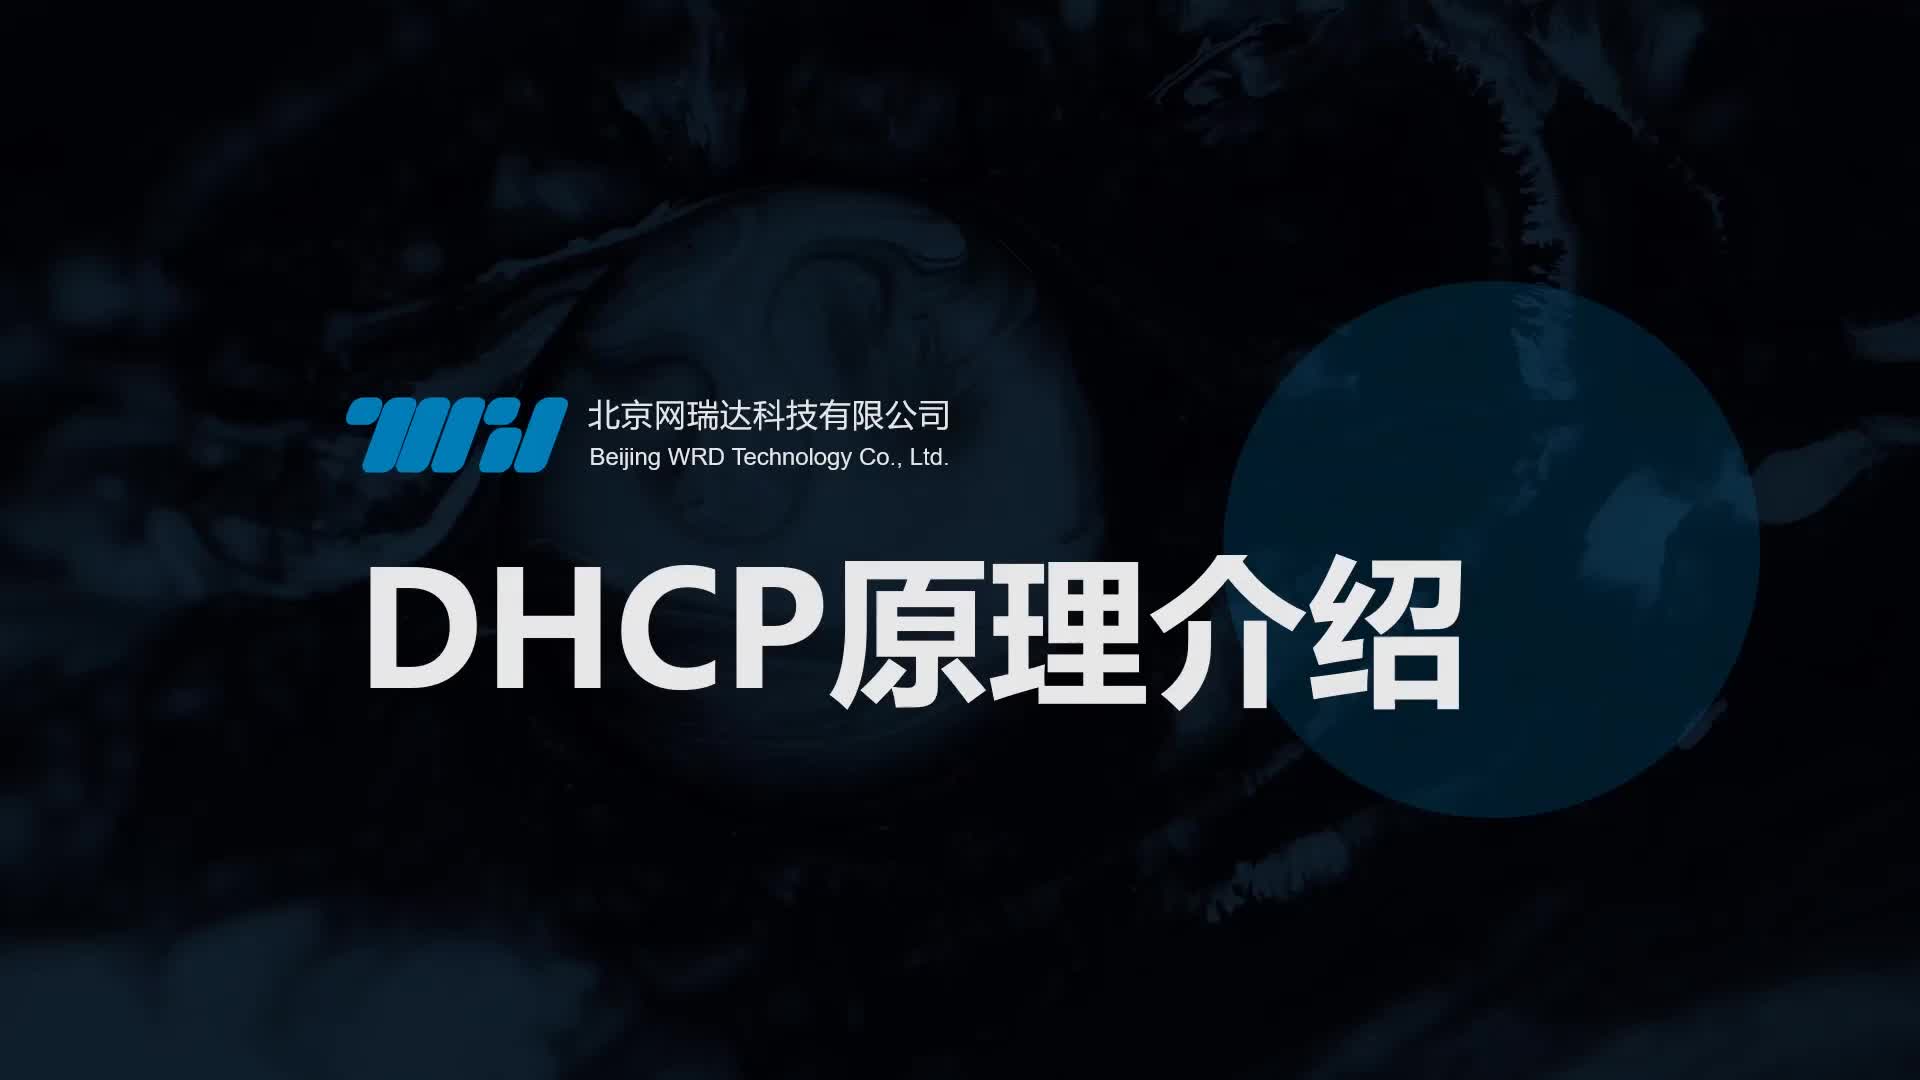 153-DHCP-DHCP原理介绍